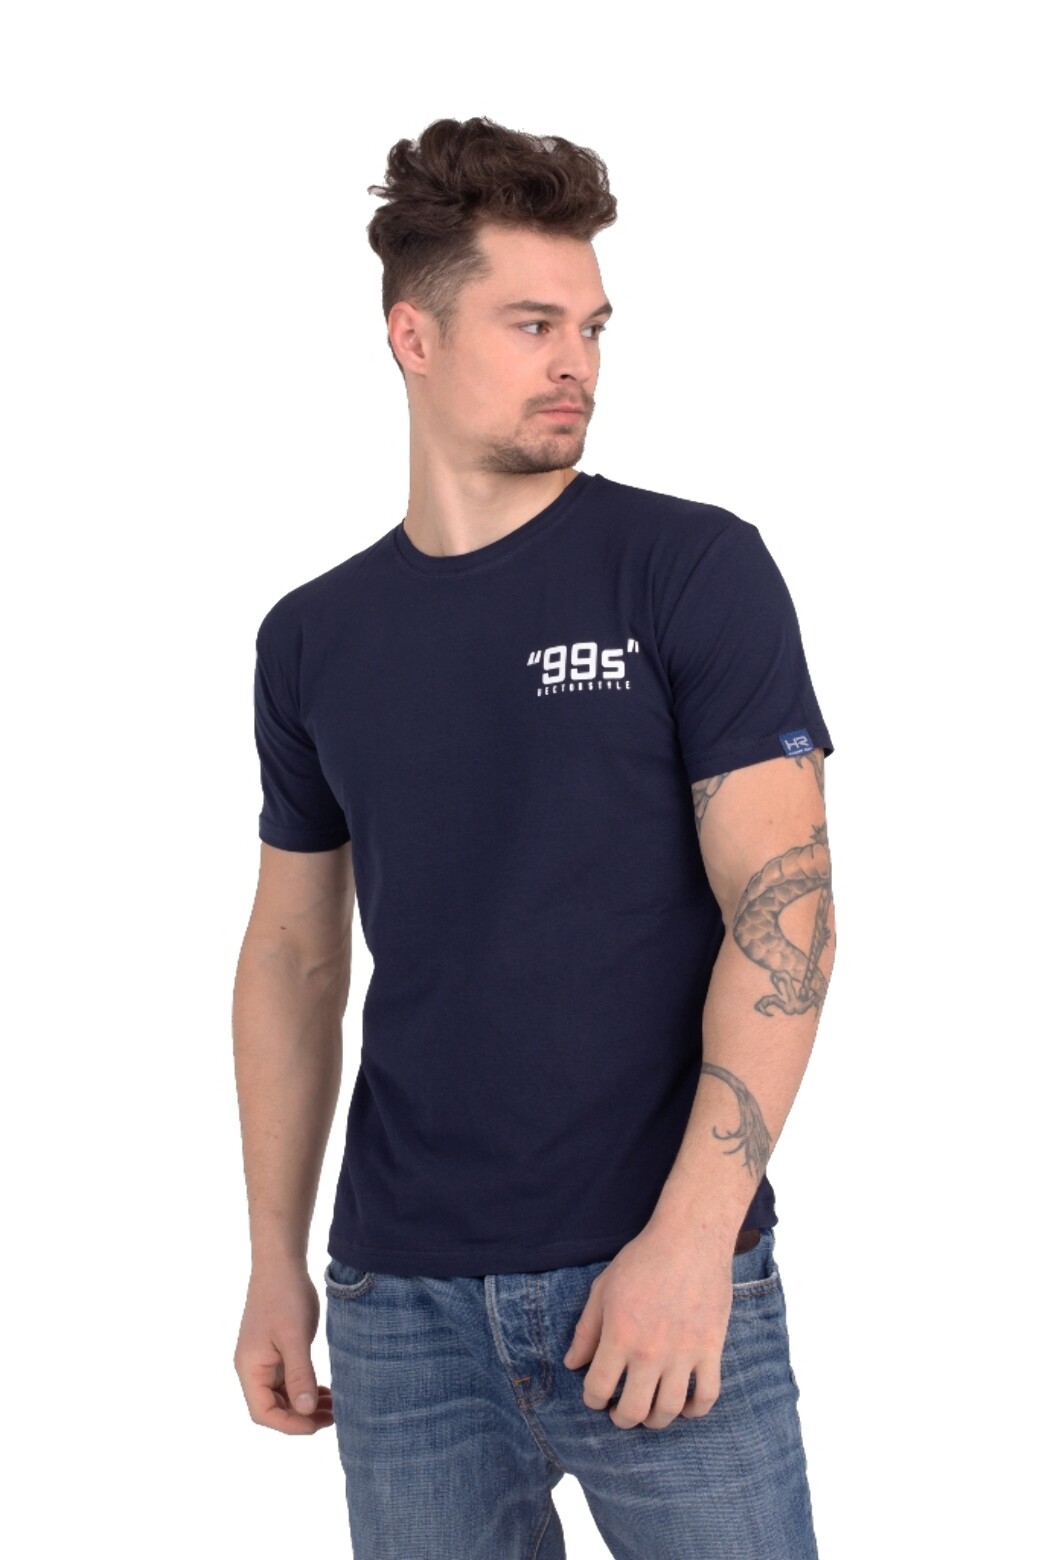 Мужская футболка 99s 15012